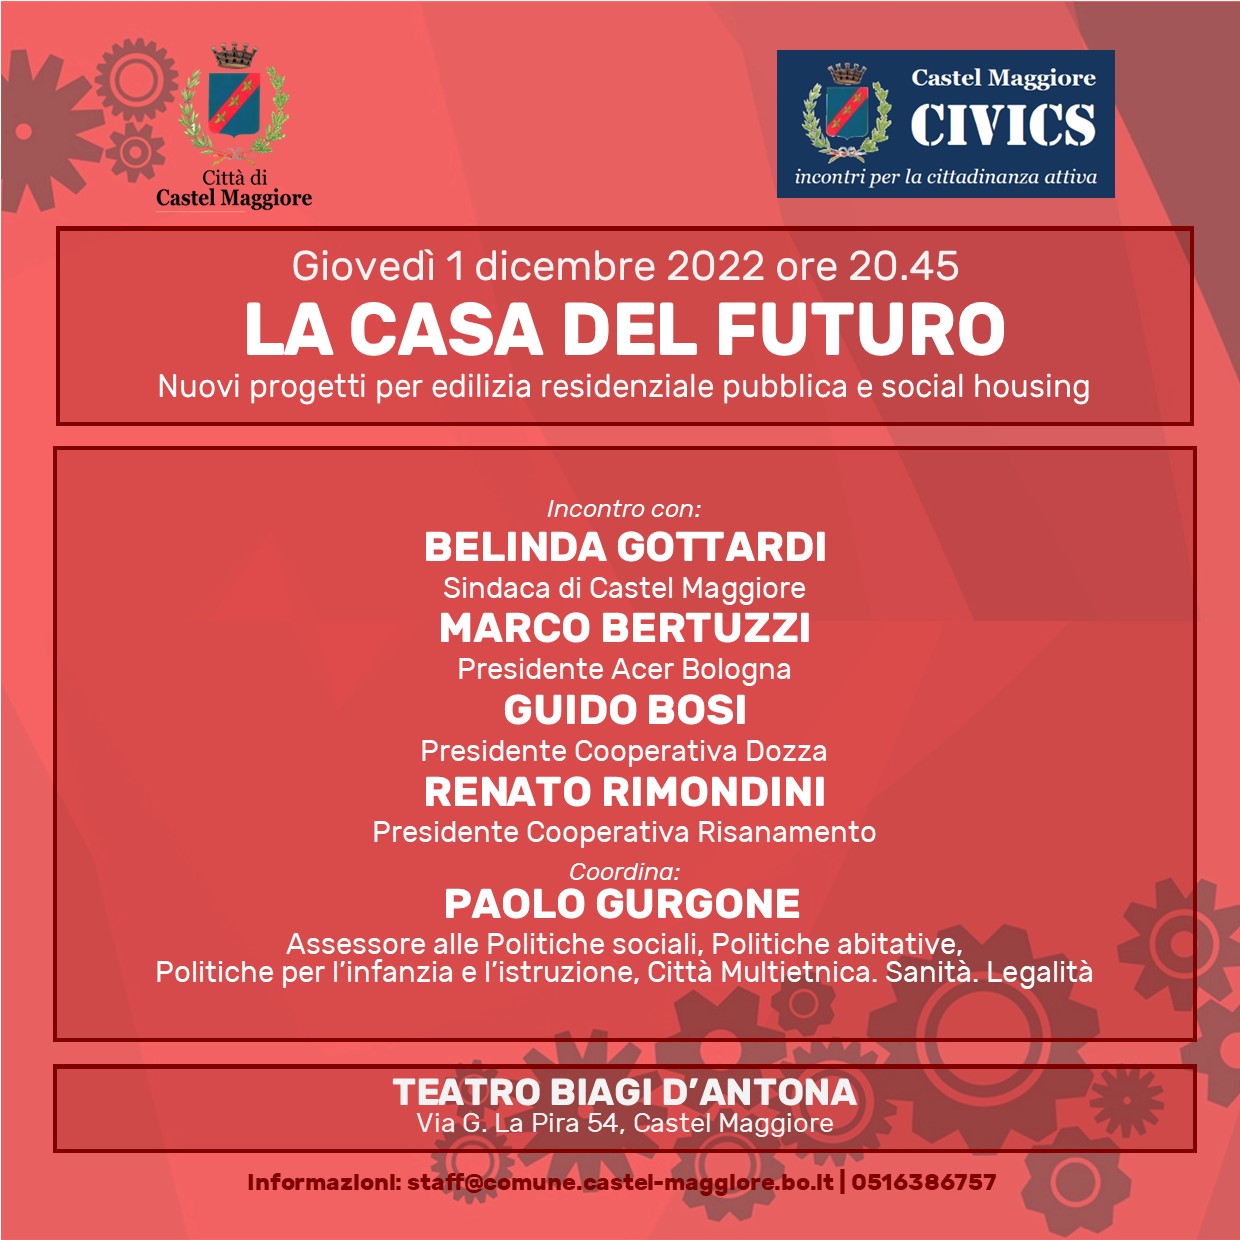 Civics: La casa del futuro